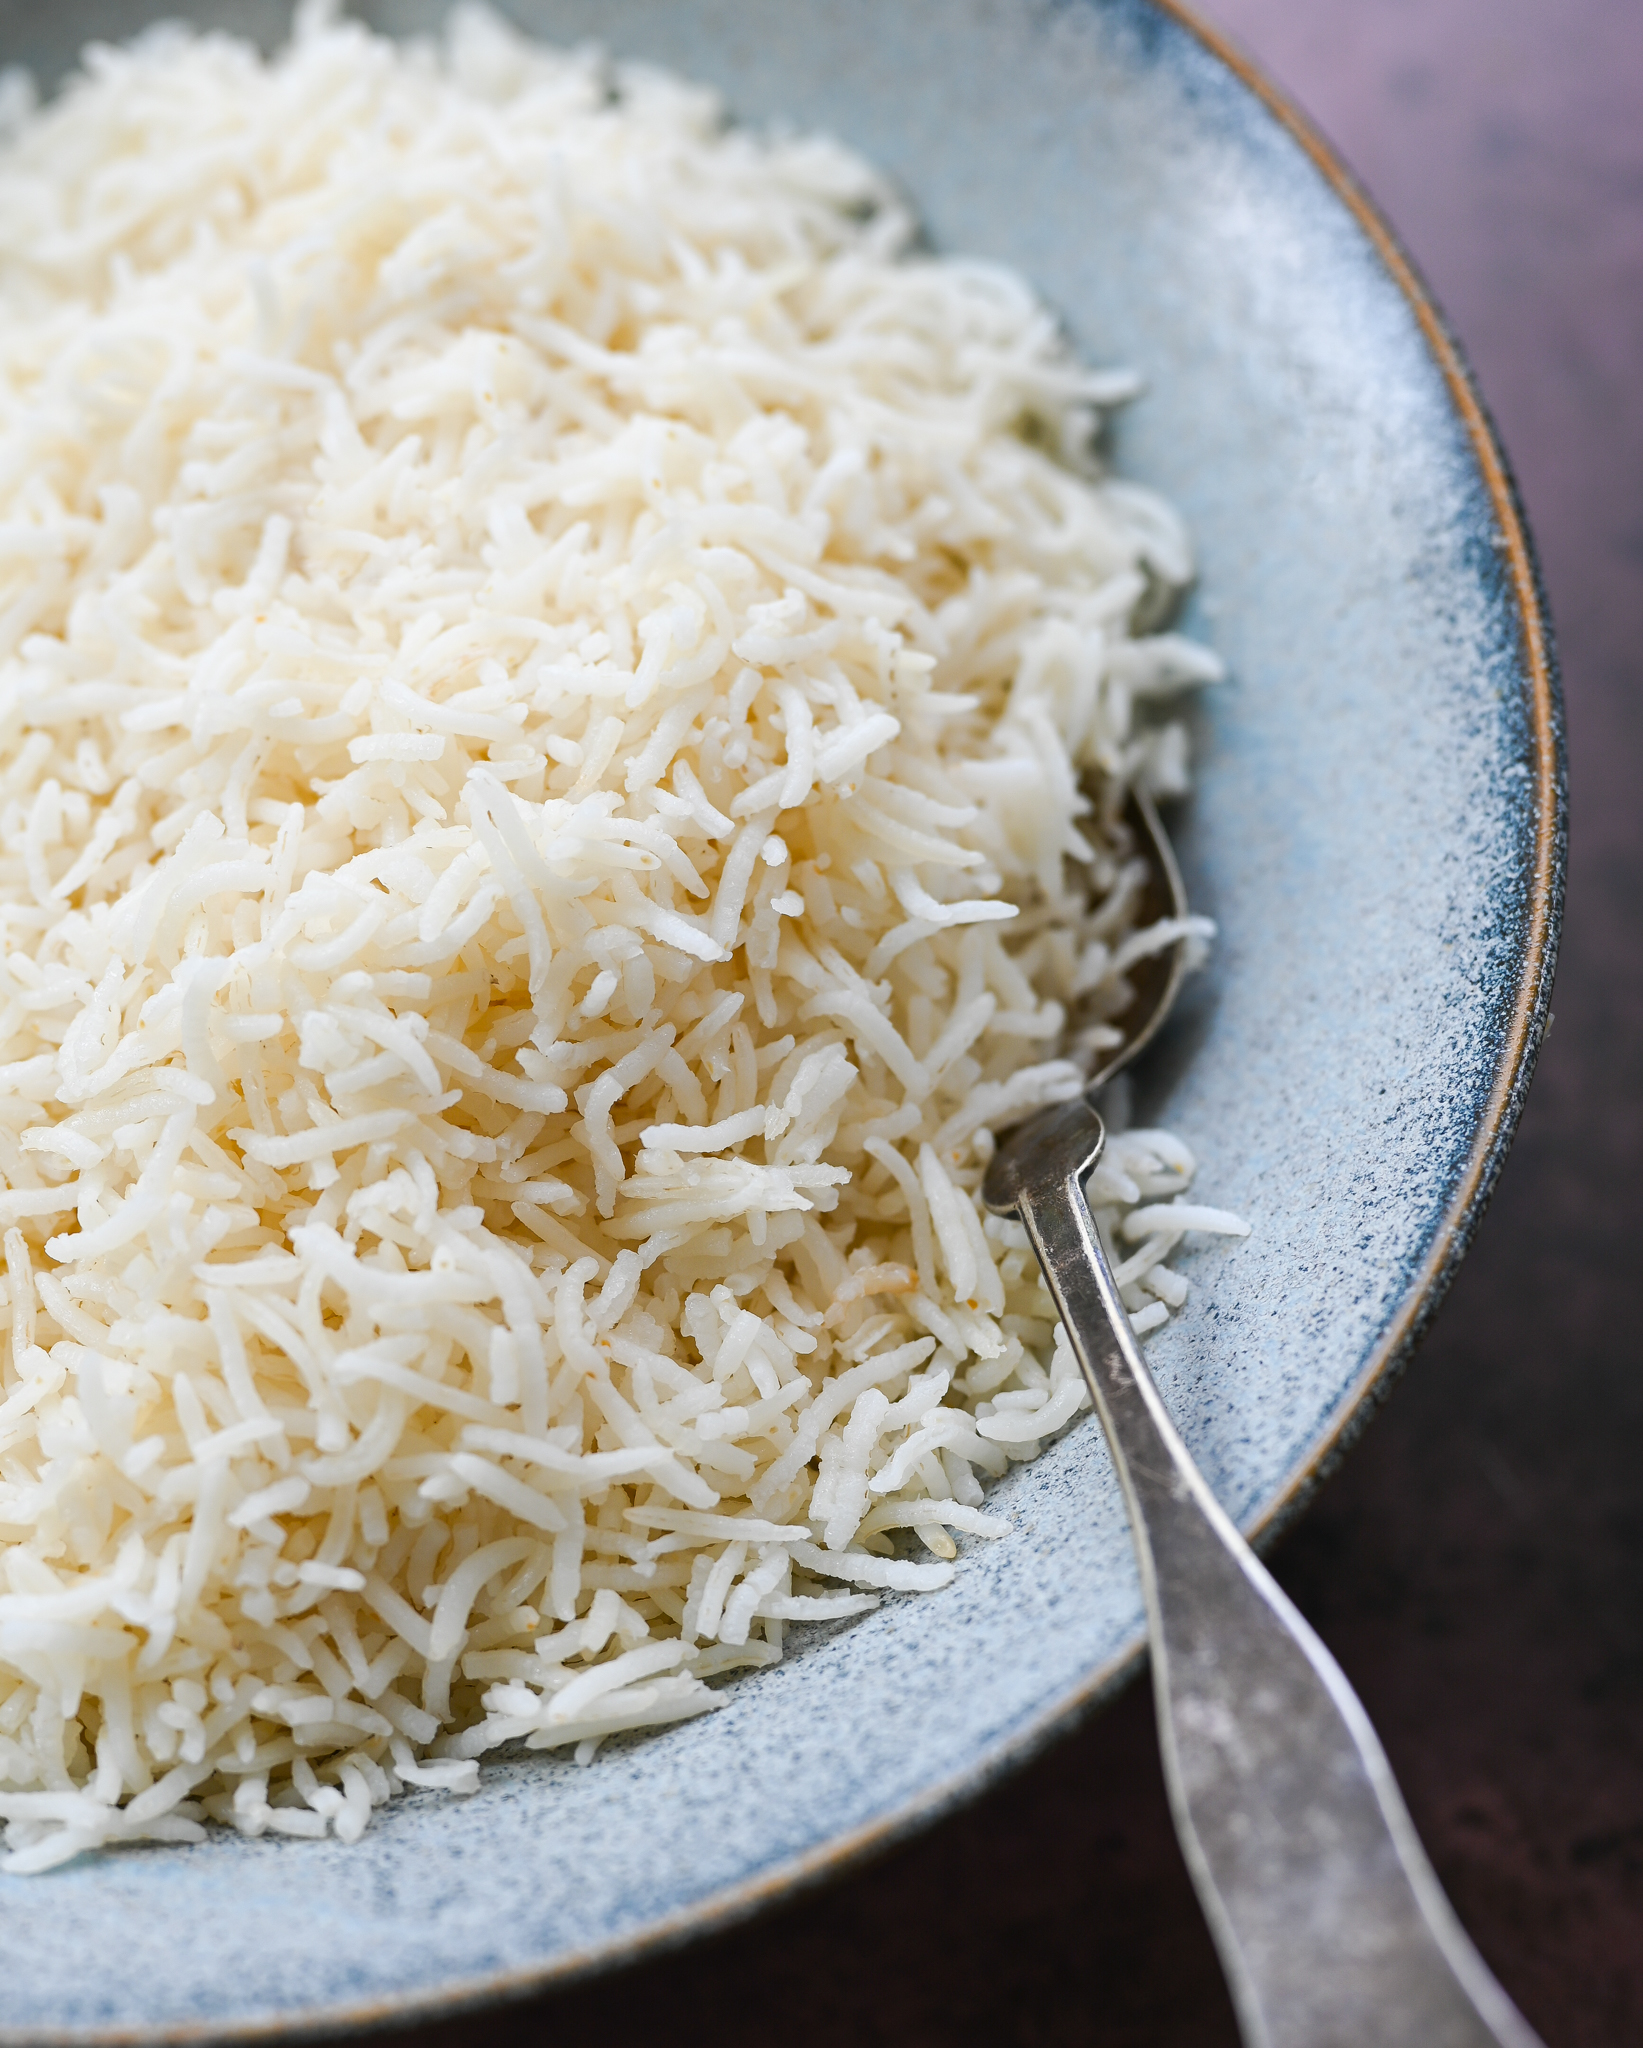 https://www.onceuponachef.com/images/2013/12/perfect-basmati-rice.jpg